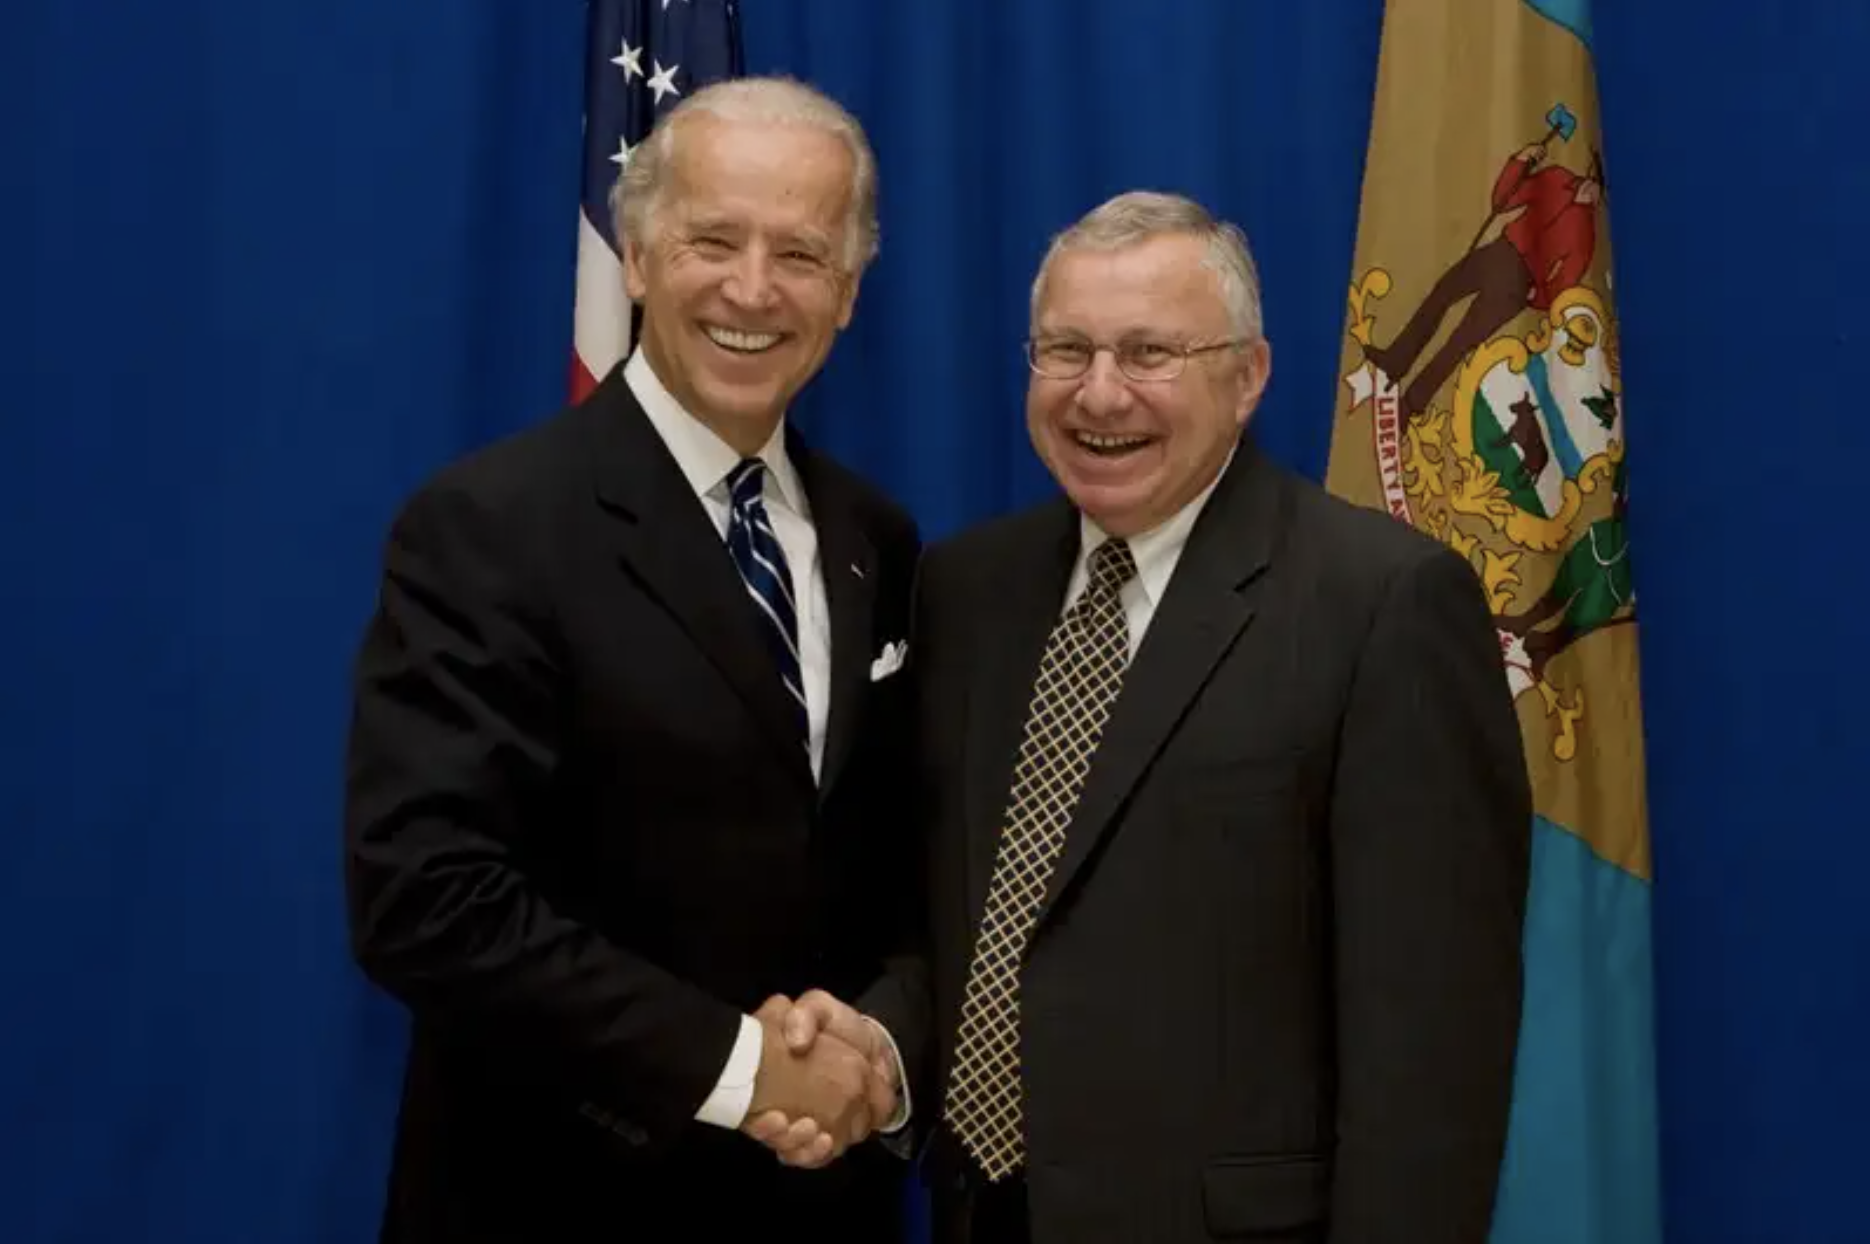 Joe Biden and Dan Rich shaking hands